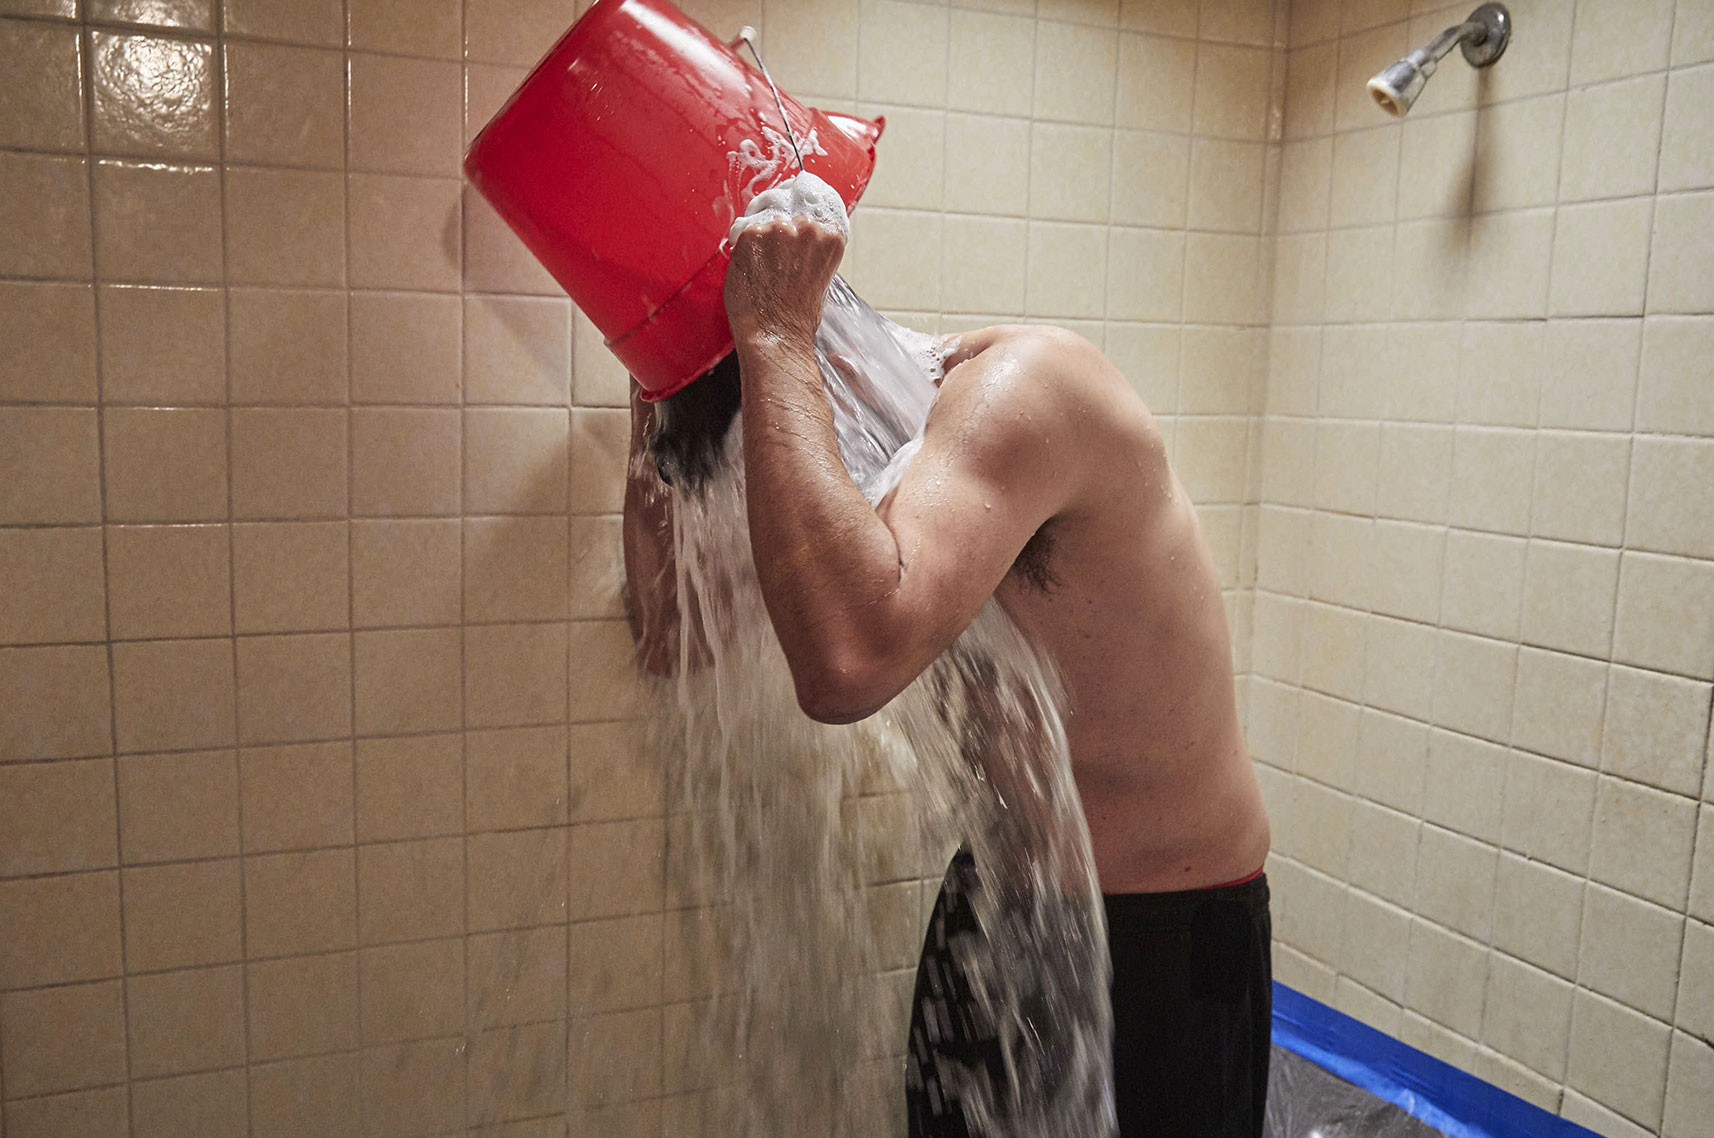 sf_12-Shower-Water-Bucket-Husband_ABB